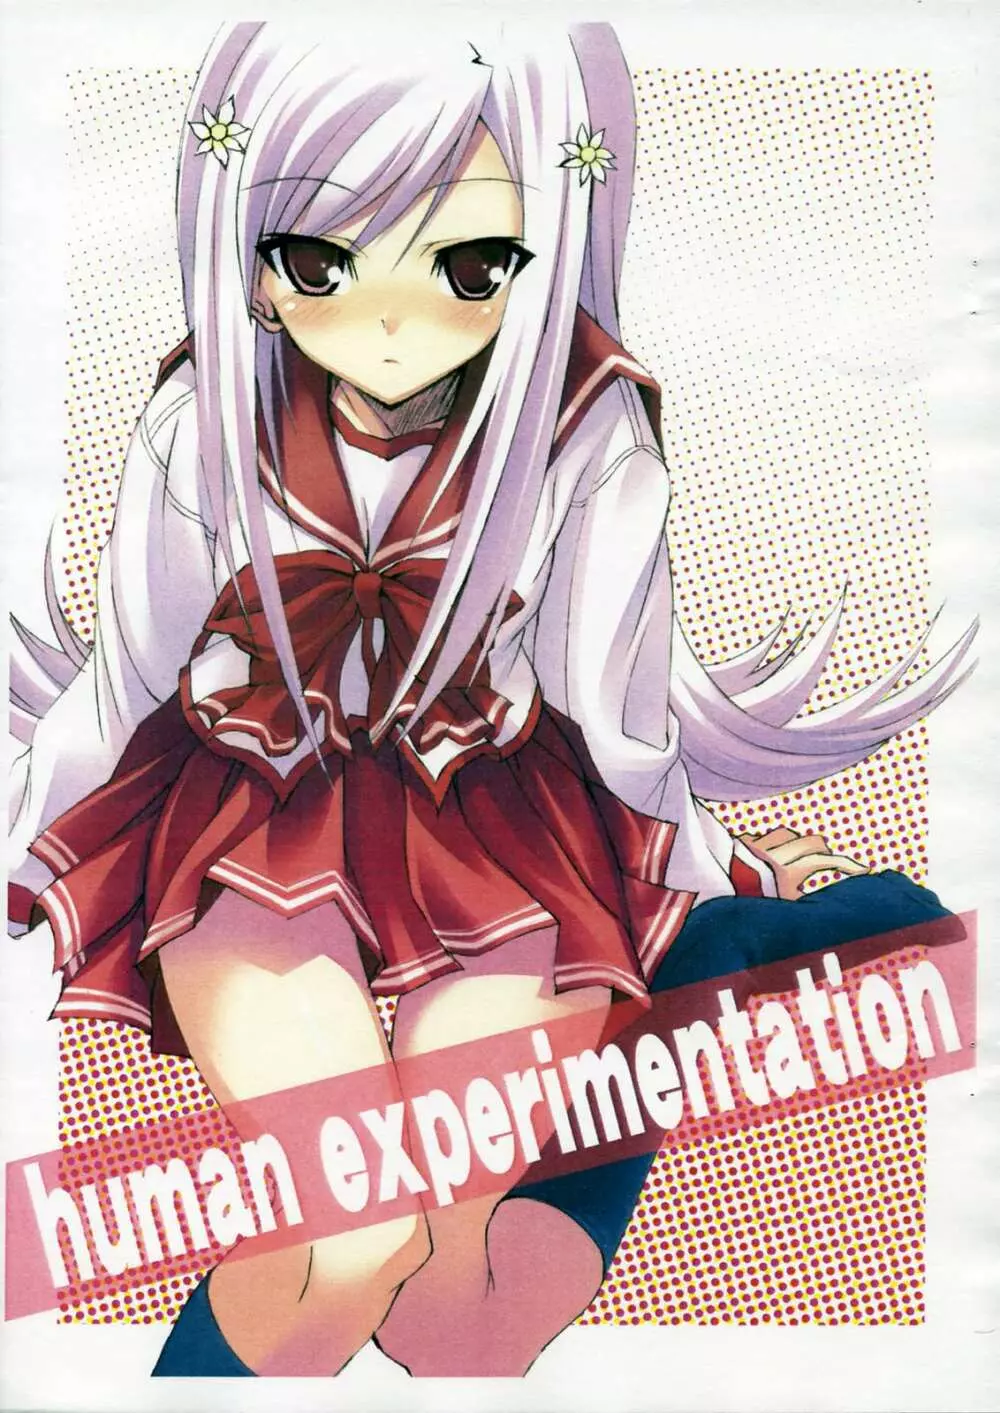 human experimentation - page1